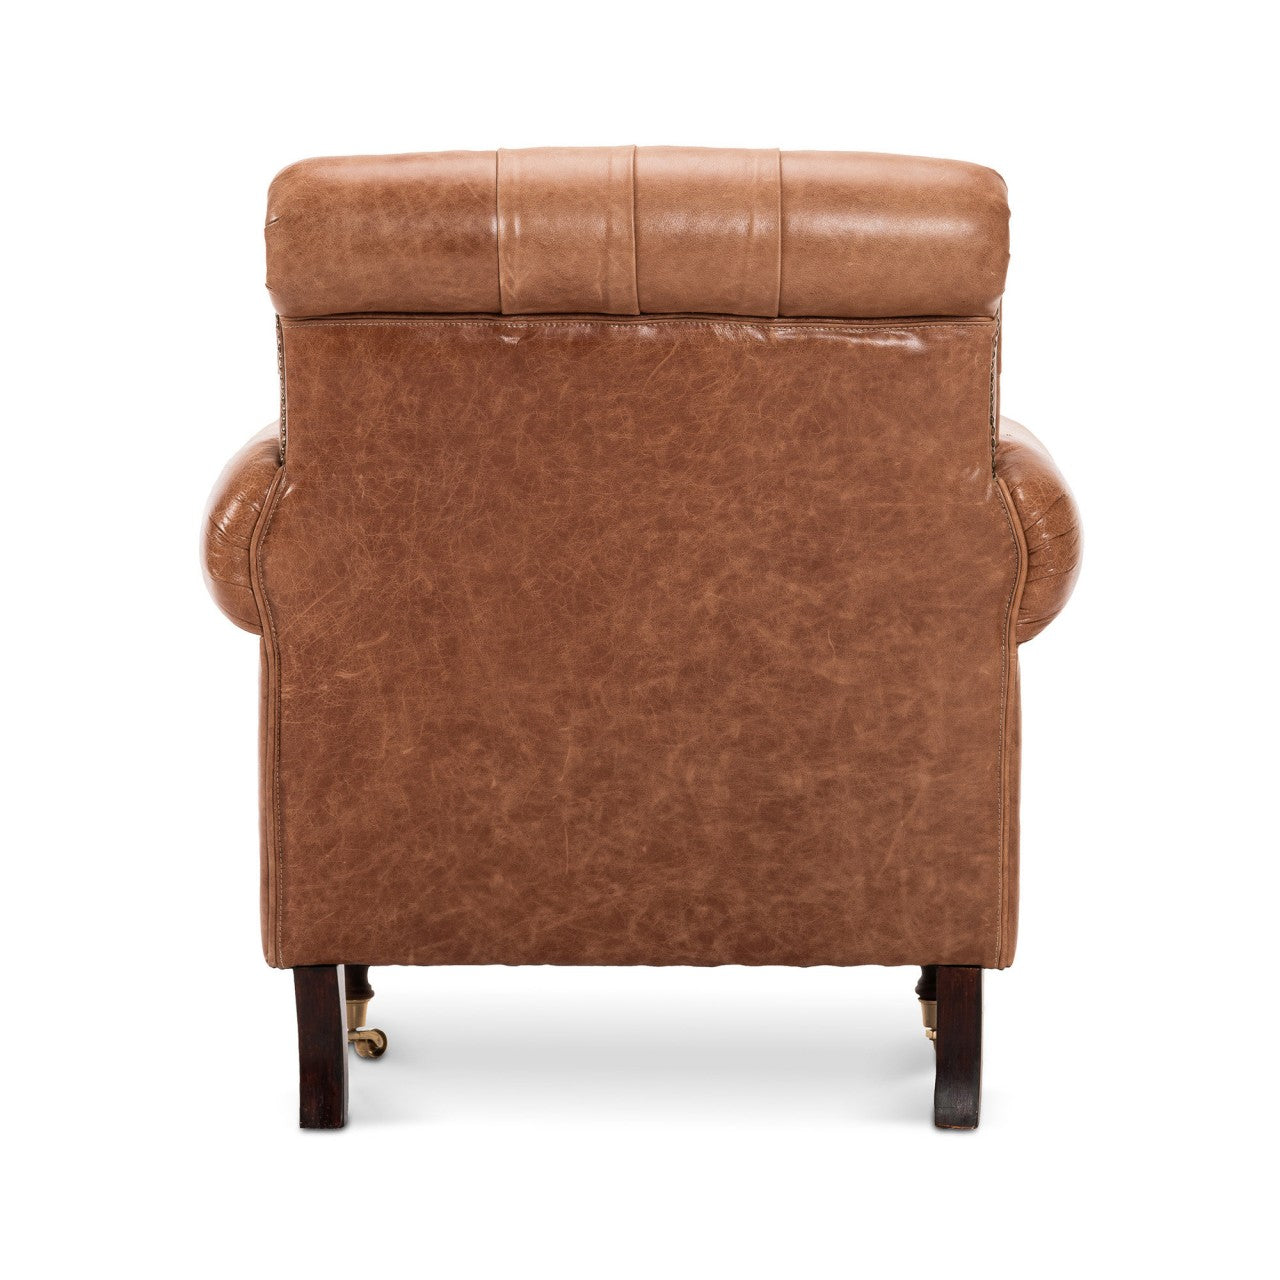 Kingston Chair - Cambridge Hazelnut leather